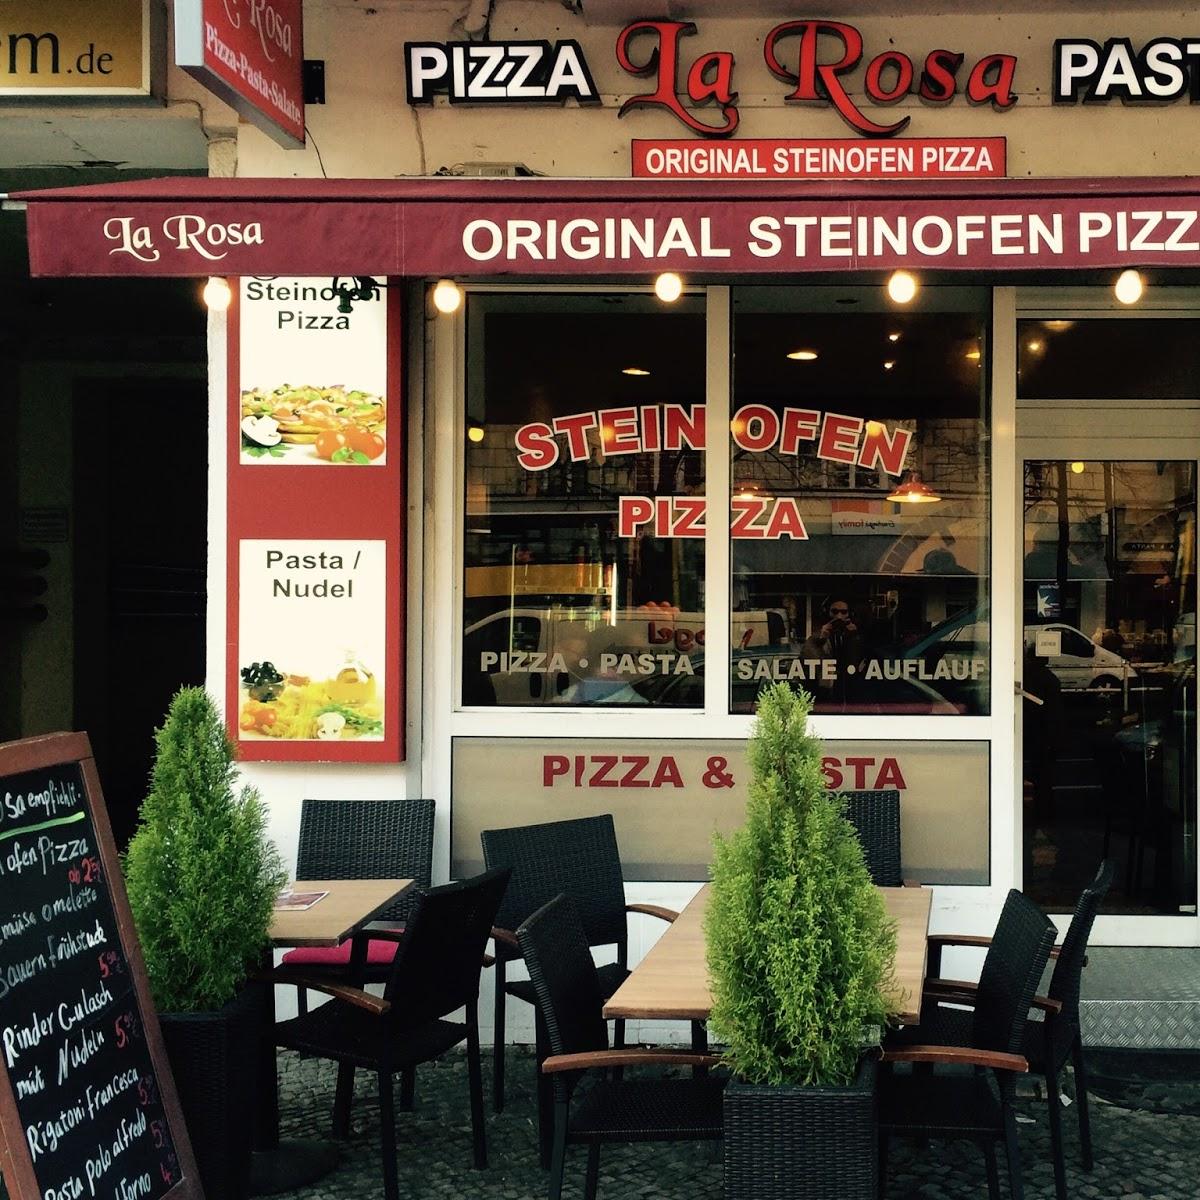 Restaurant "Pizza La Rosa" in Berlin